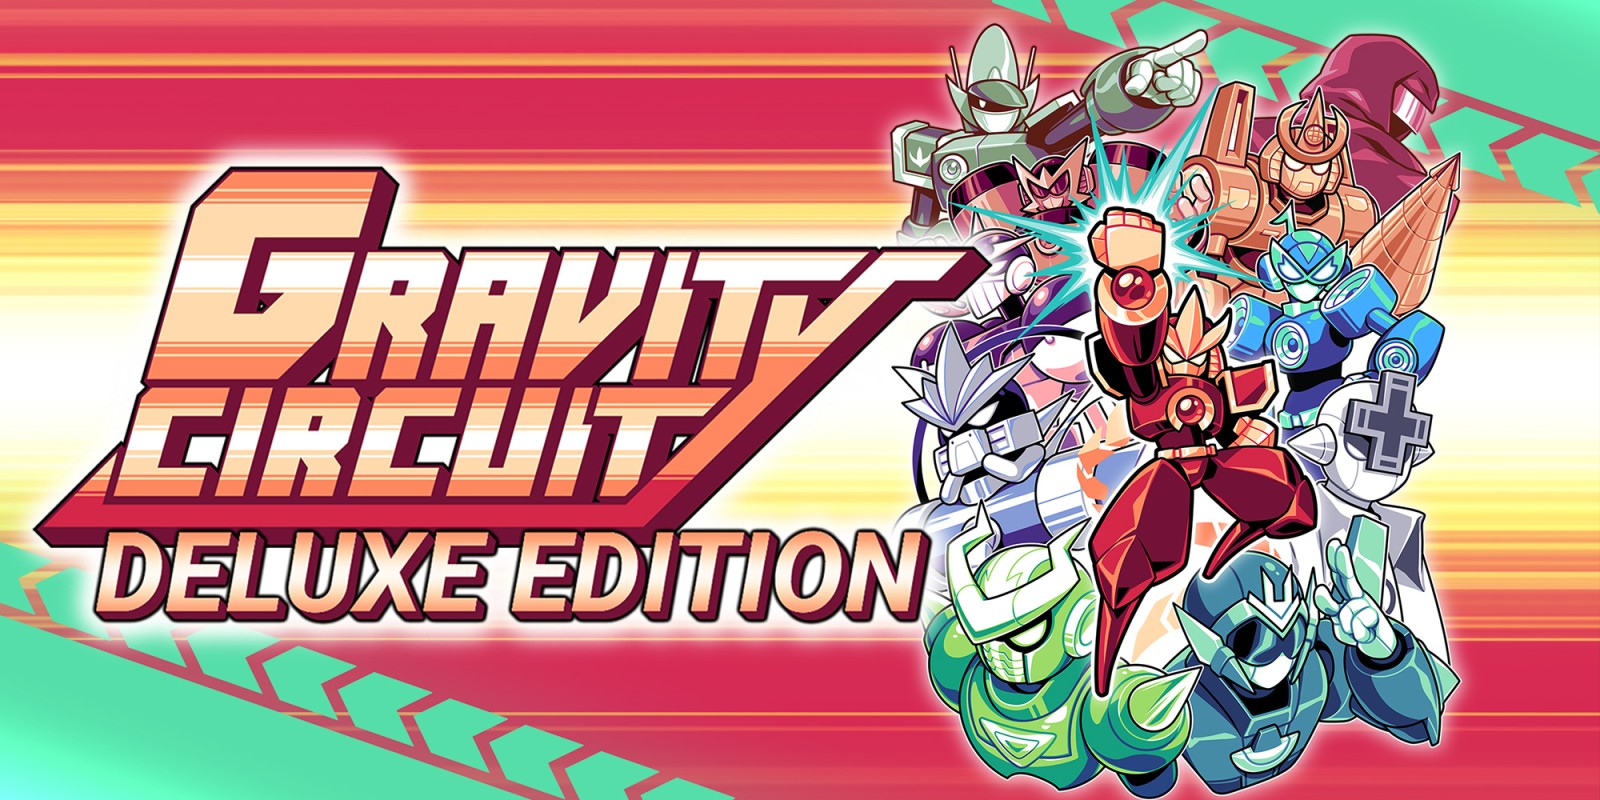 Gravity Circuit Deluxe Edition